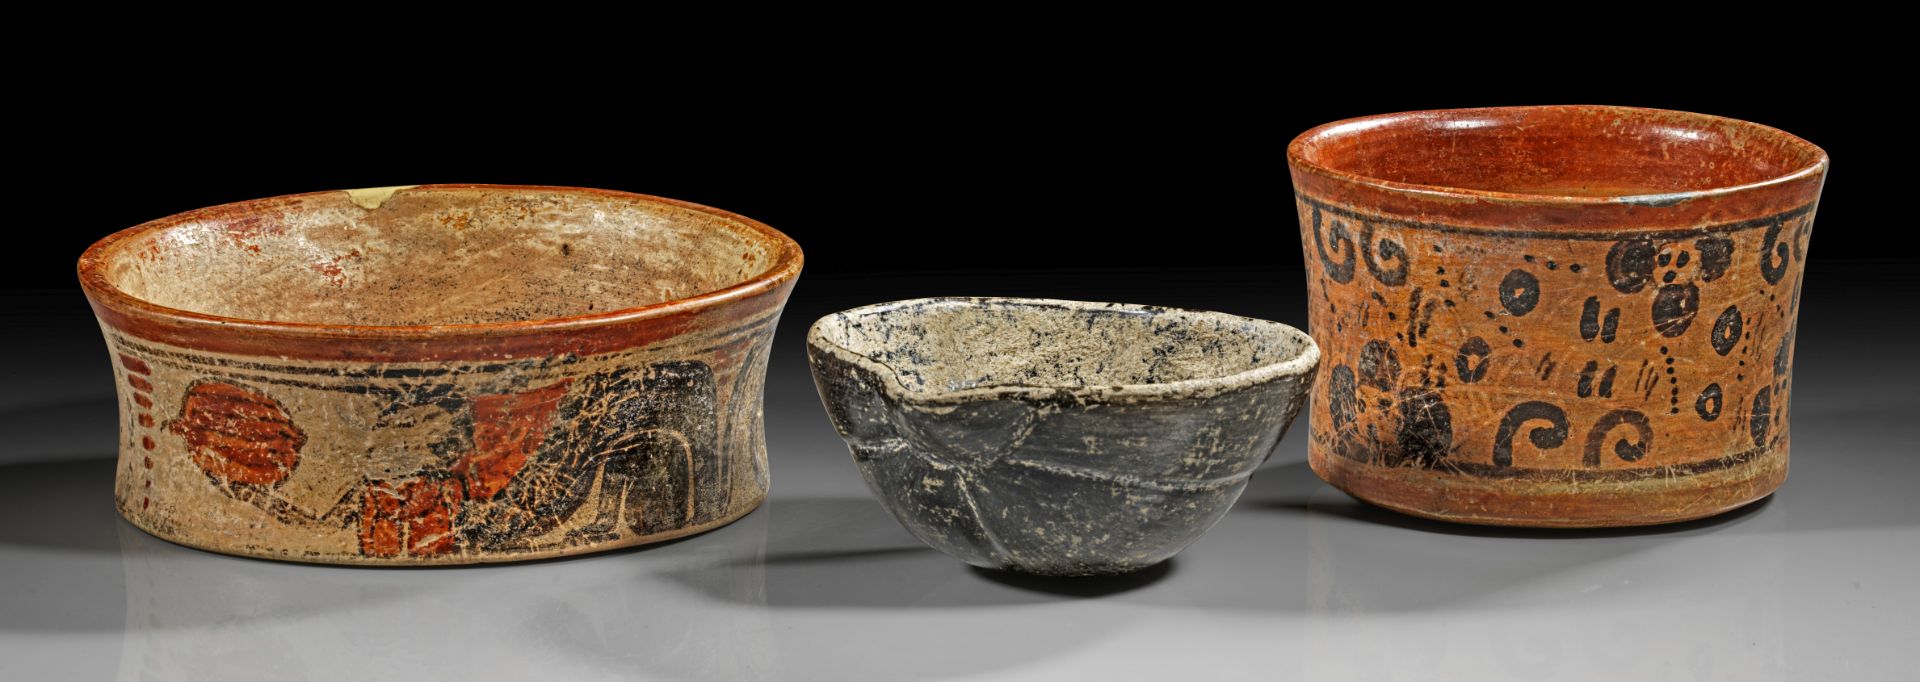 Three Precolumbian bowls.